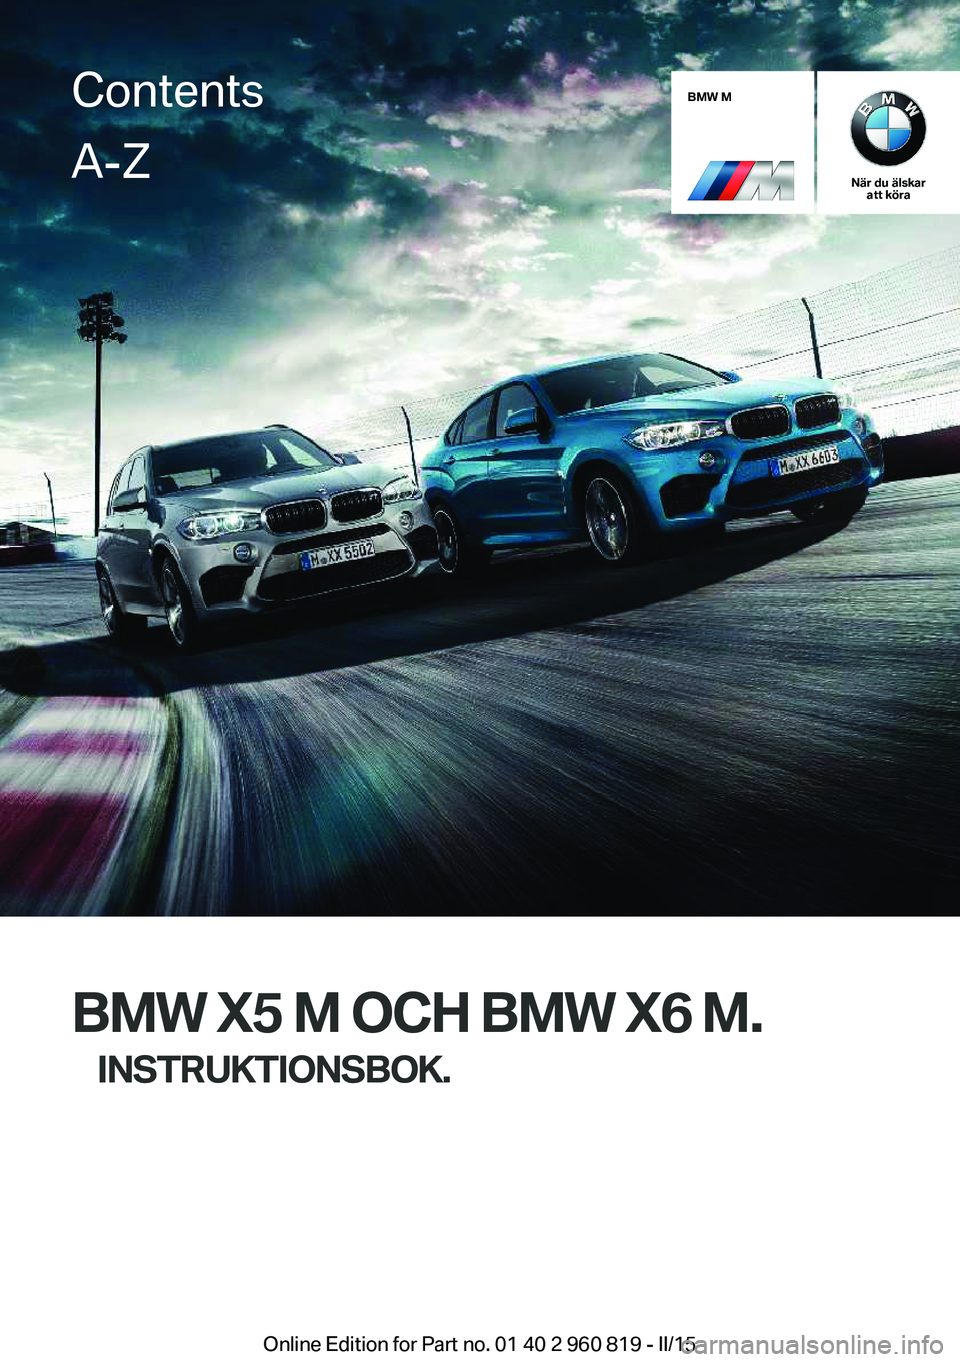 BMW X6 M 2016  InstruktionsbÖcker (in Swedish) BMW M
När du älskaratt köra
BMW X5 M OCH BMW X6 M.
INSTRUKTIONSBOK.
ContentsA-Z
Online Edition for Part no. 01 40 2 960 819 - II/15   